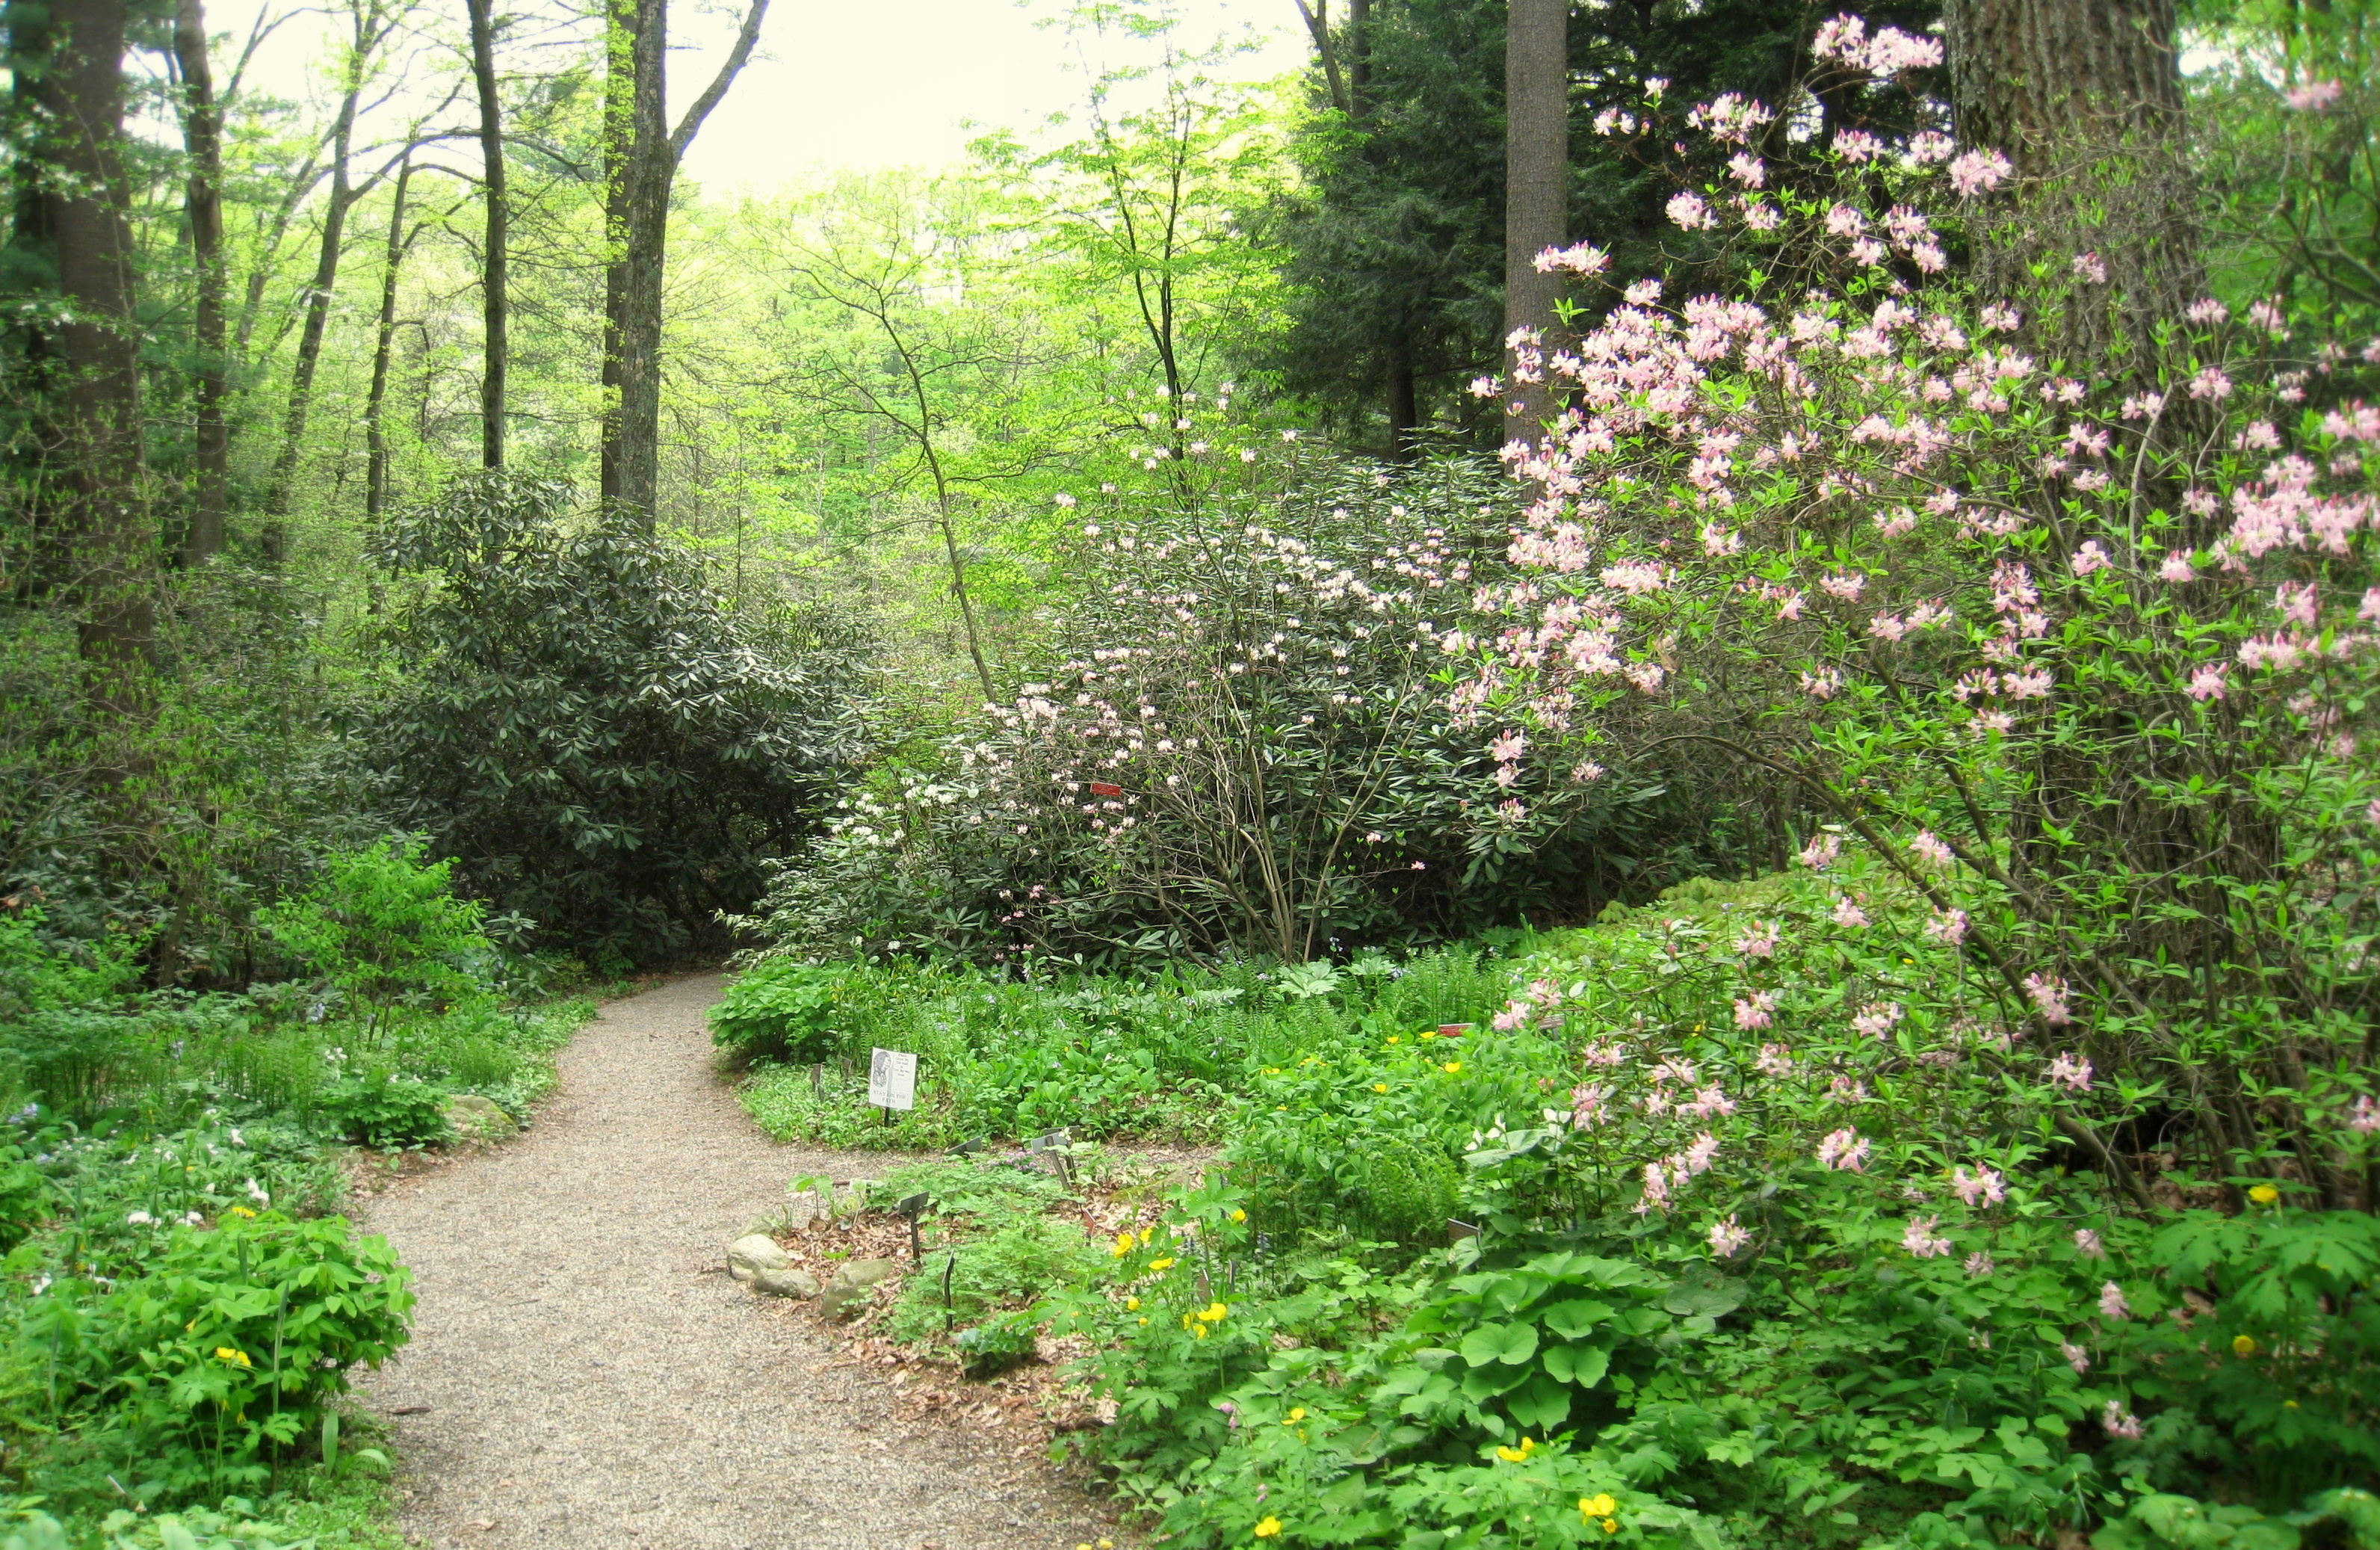 File:Garden in the Woods - IMG 2462.JPG - Wikimedia Commons